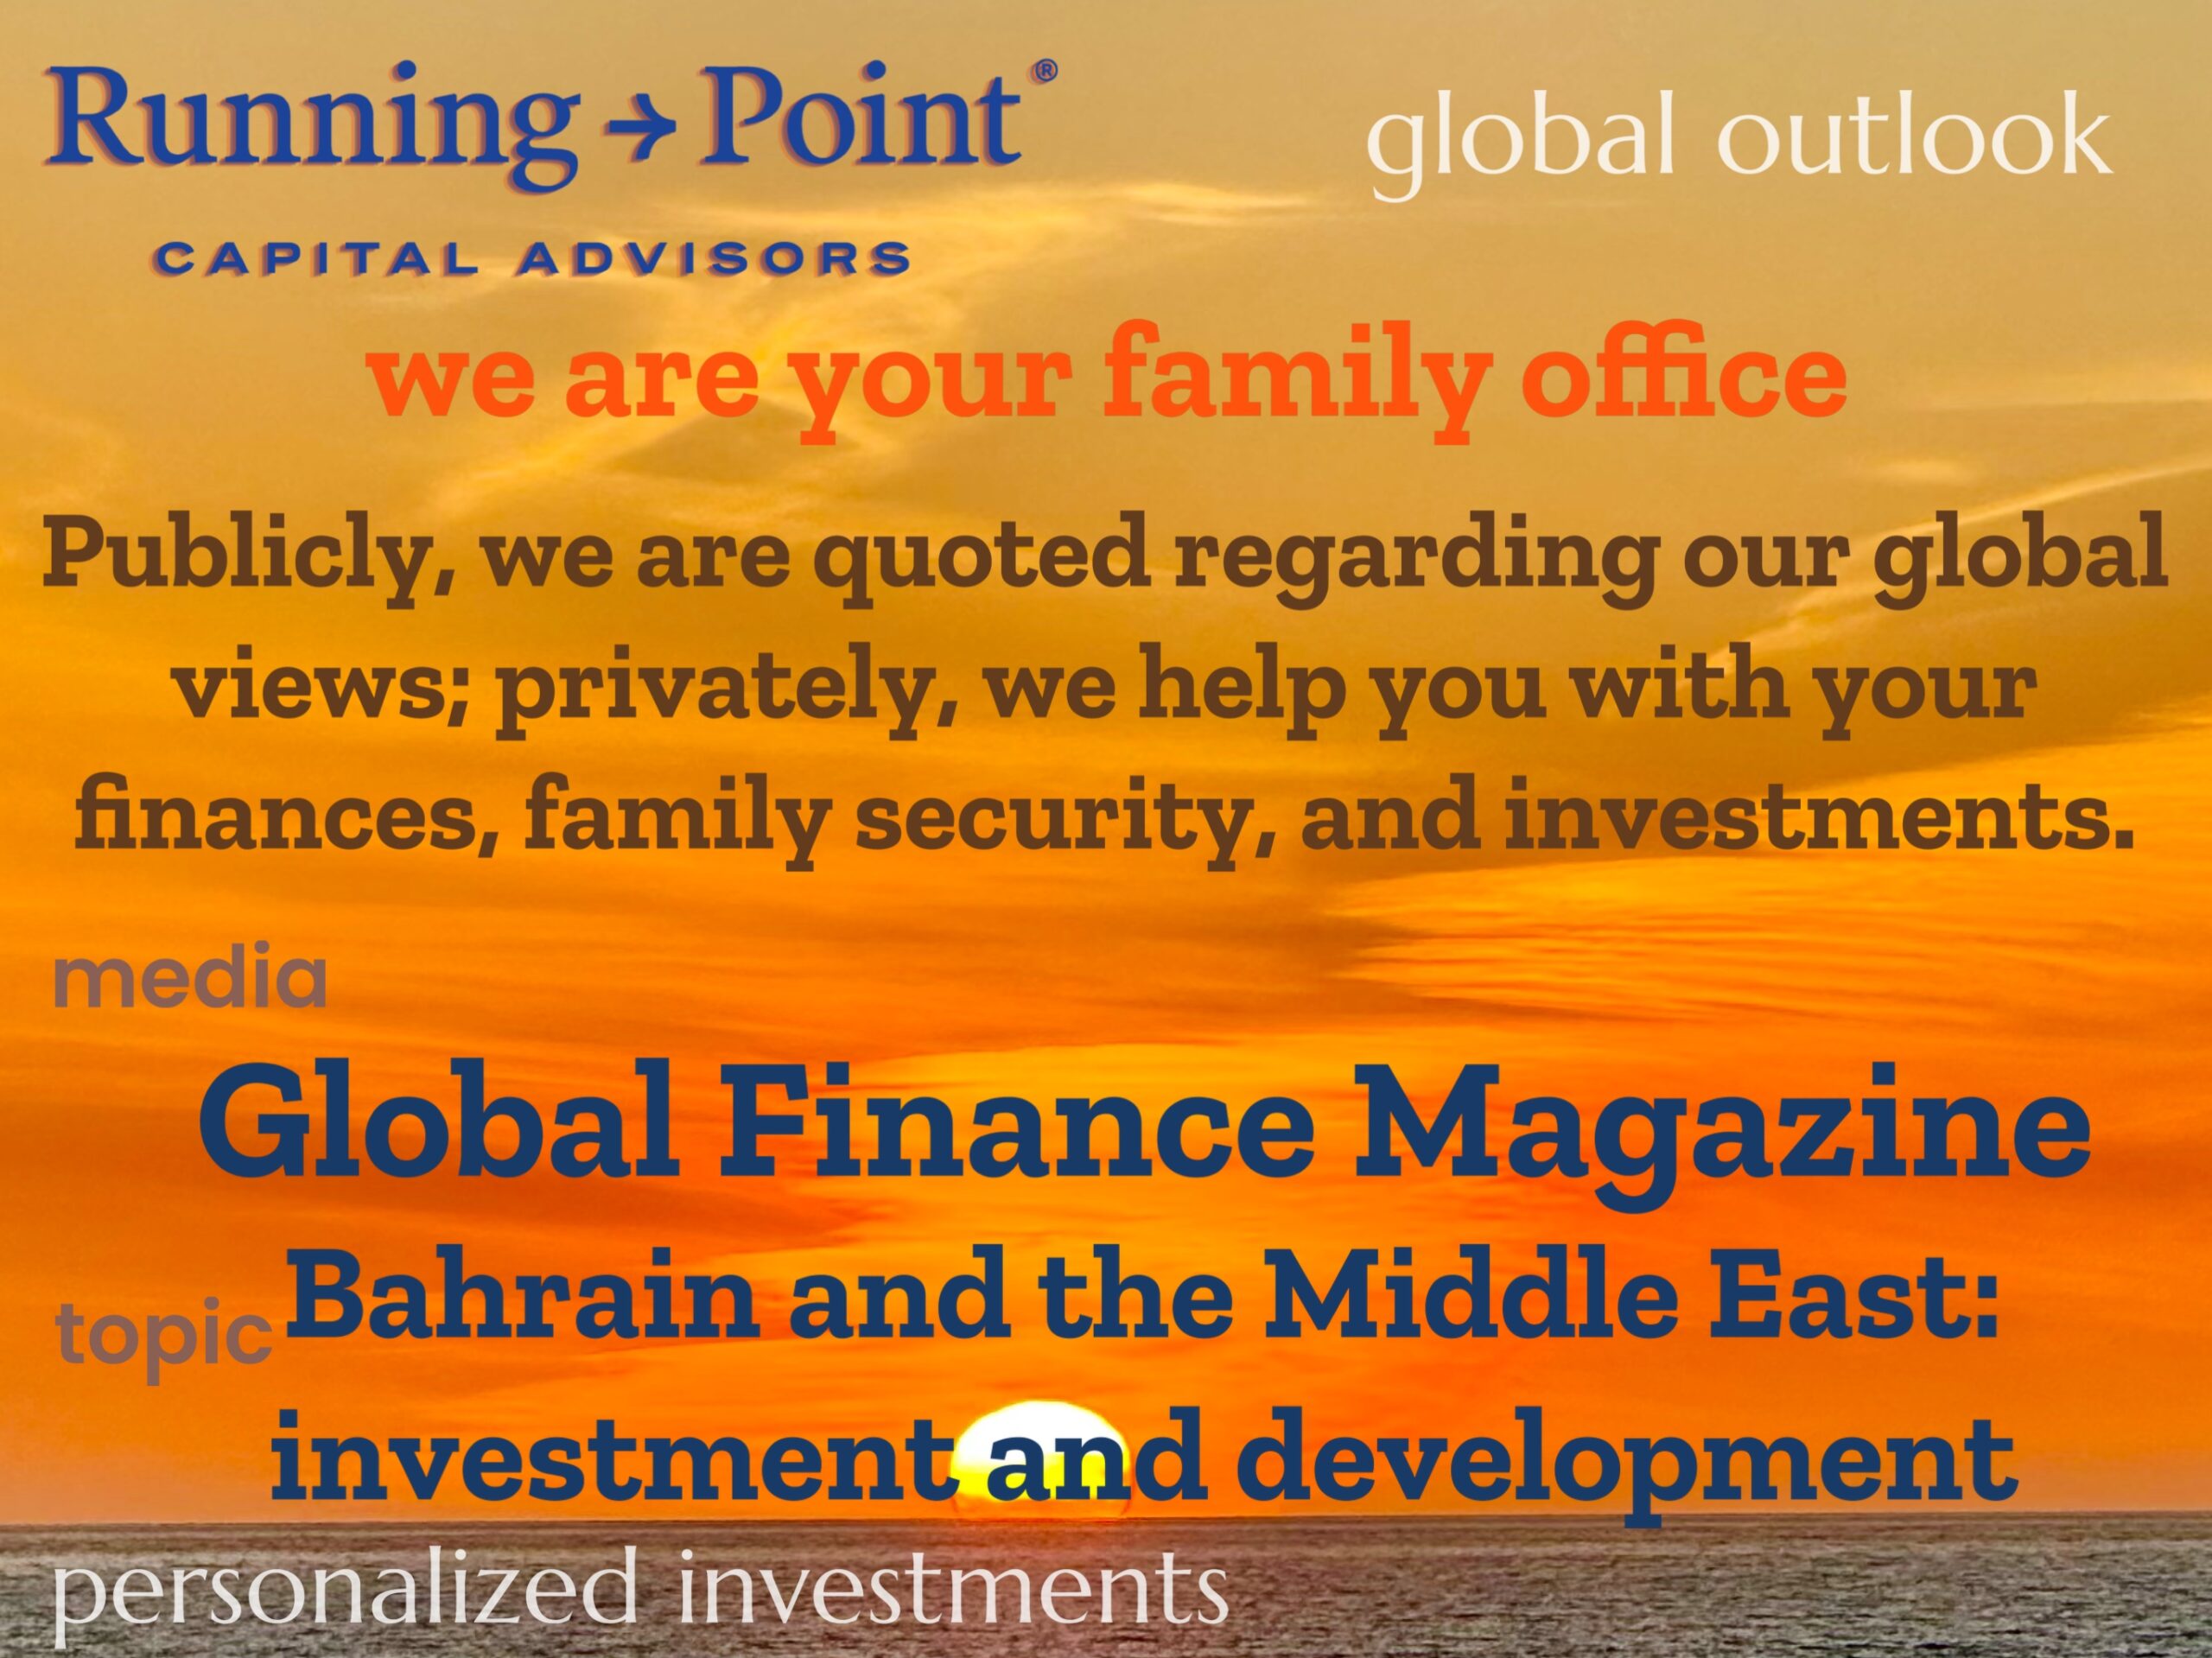 Bahrain investment and development